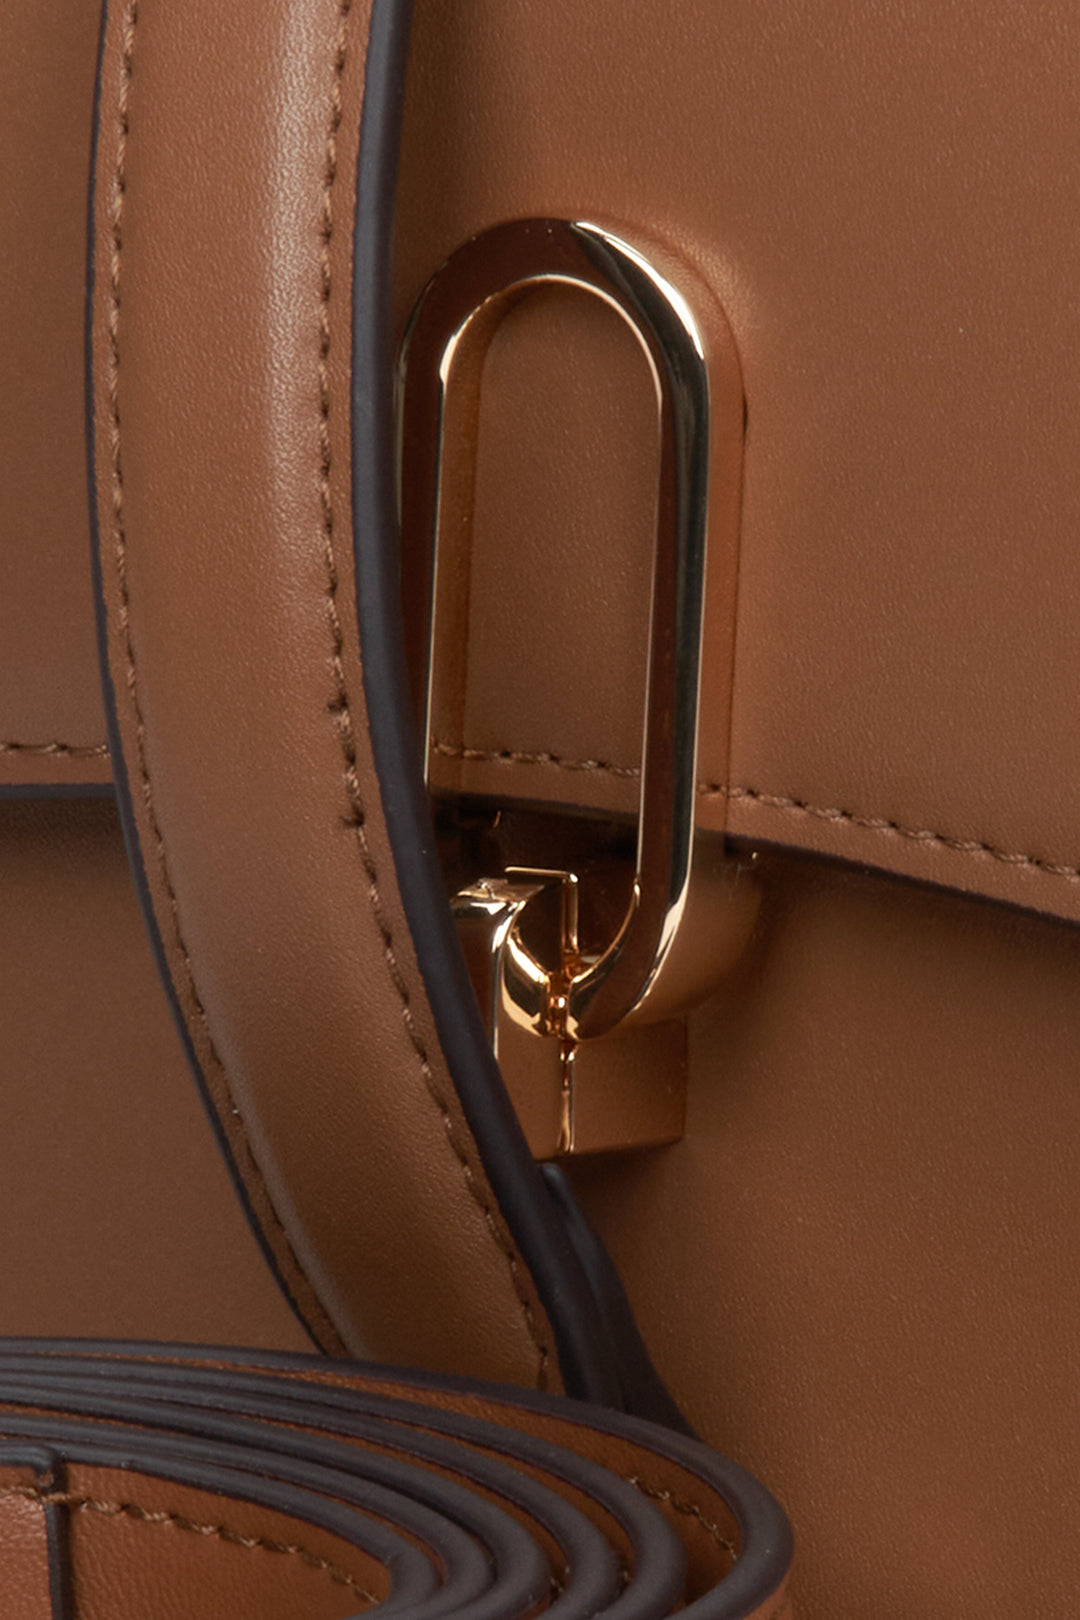 Stylish, brown women's handbag Estro made of genuine leather - close-up on details.